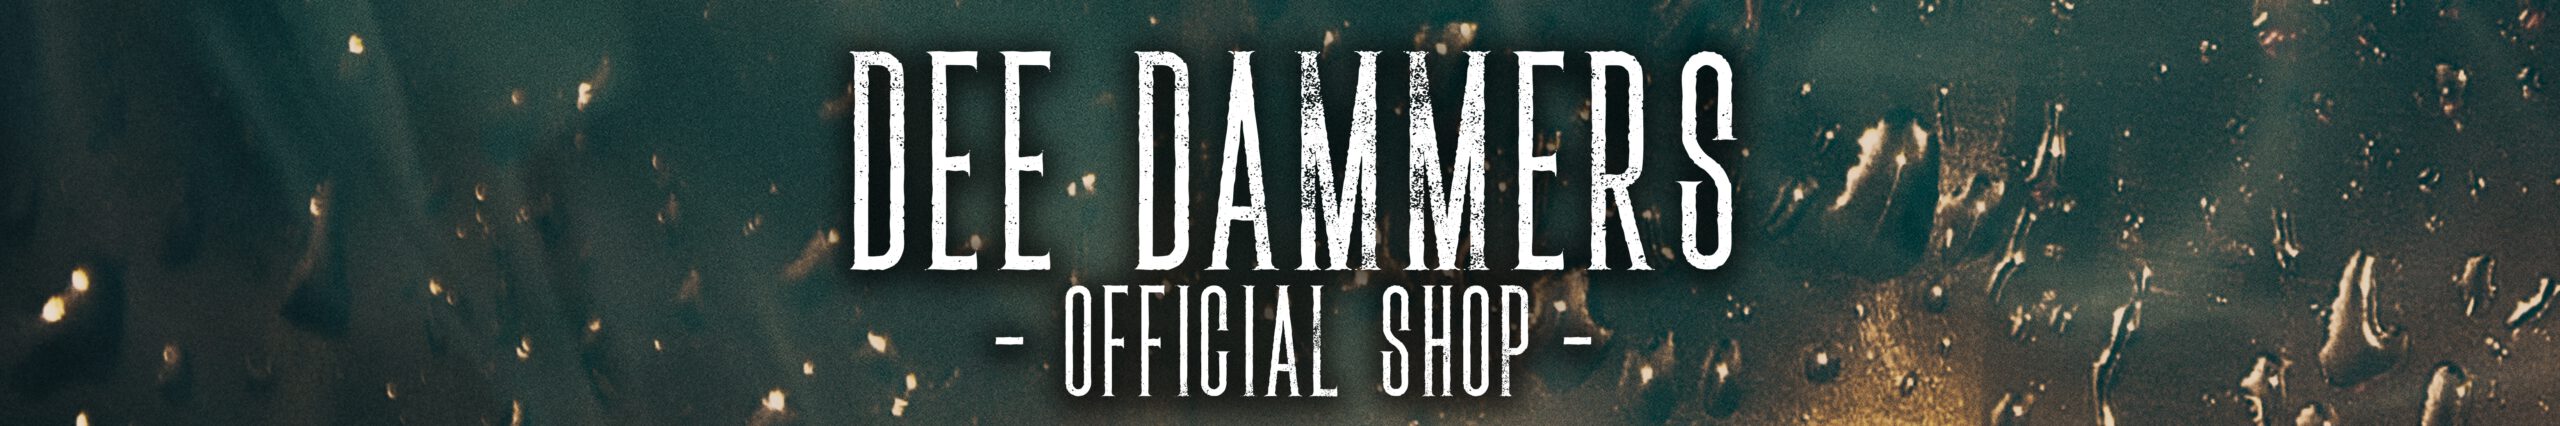 Dee Dammers - Shop